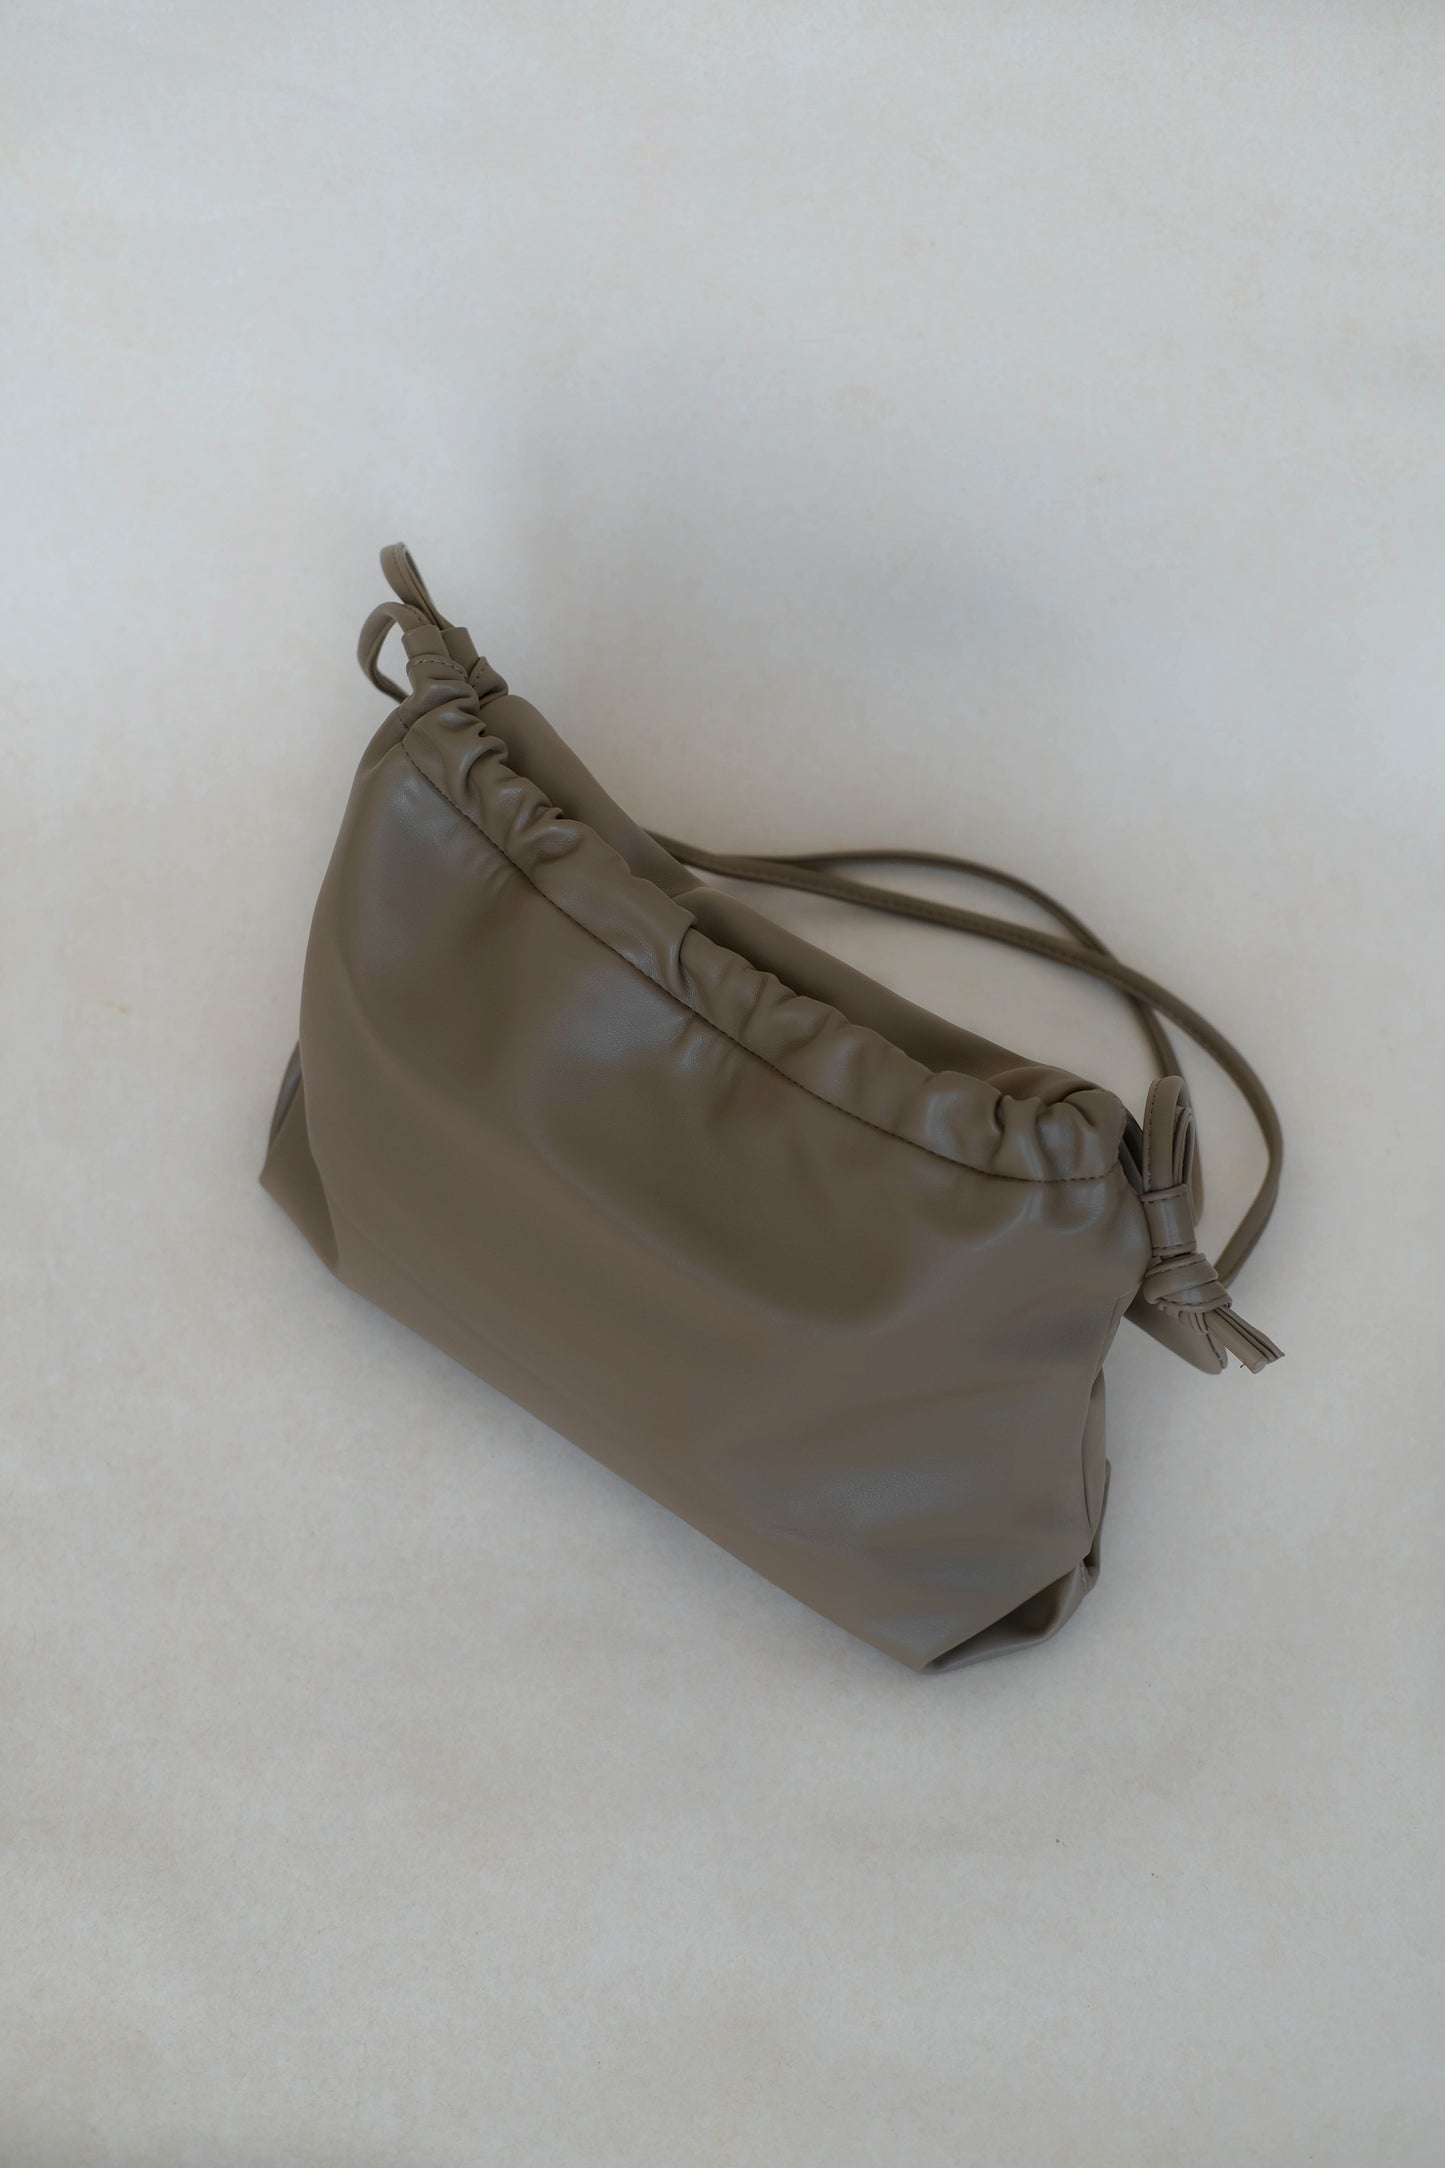 Drawstring pleated large capacity shoulder bag in mud color